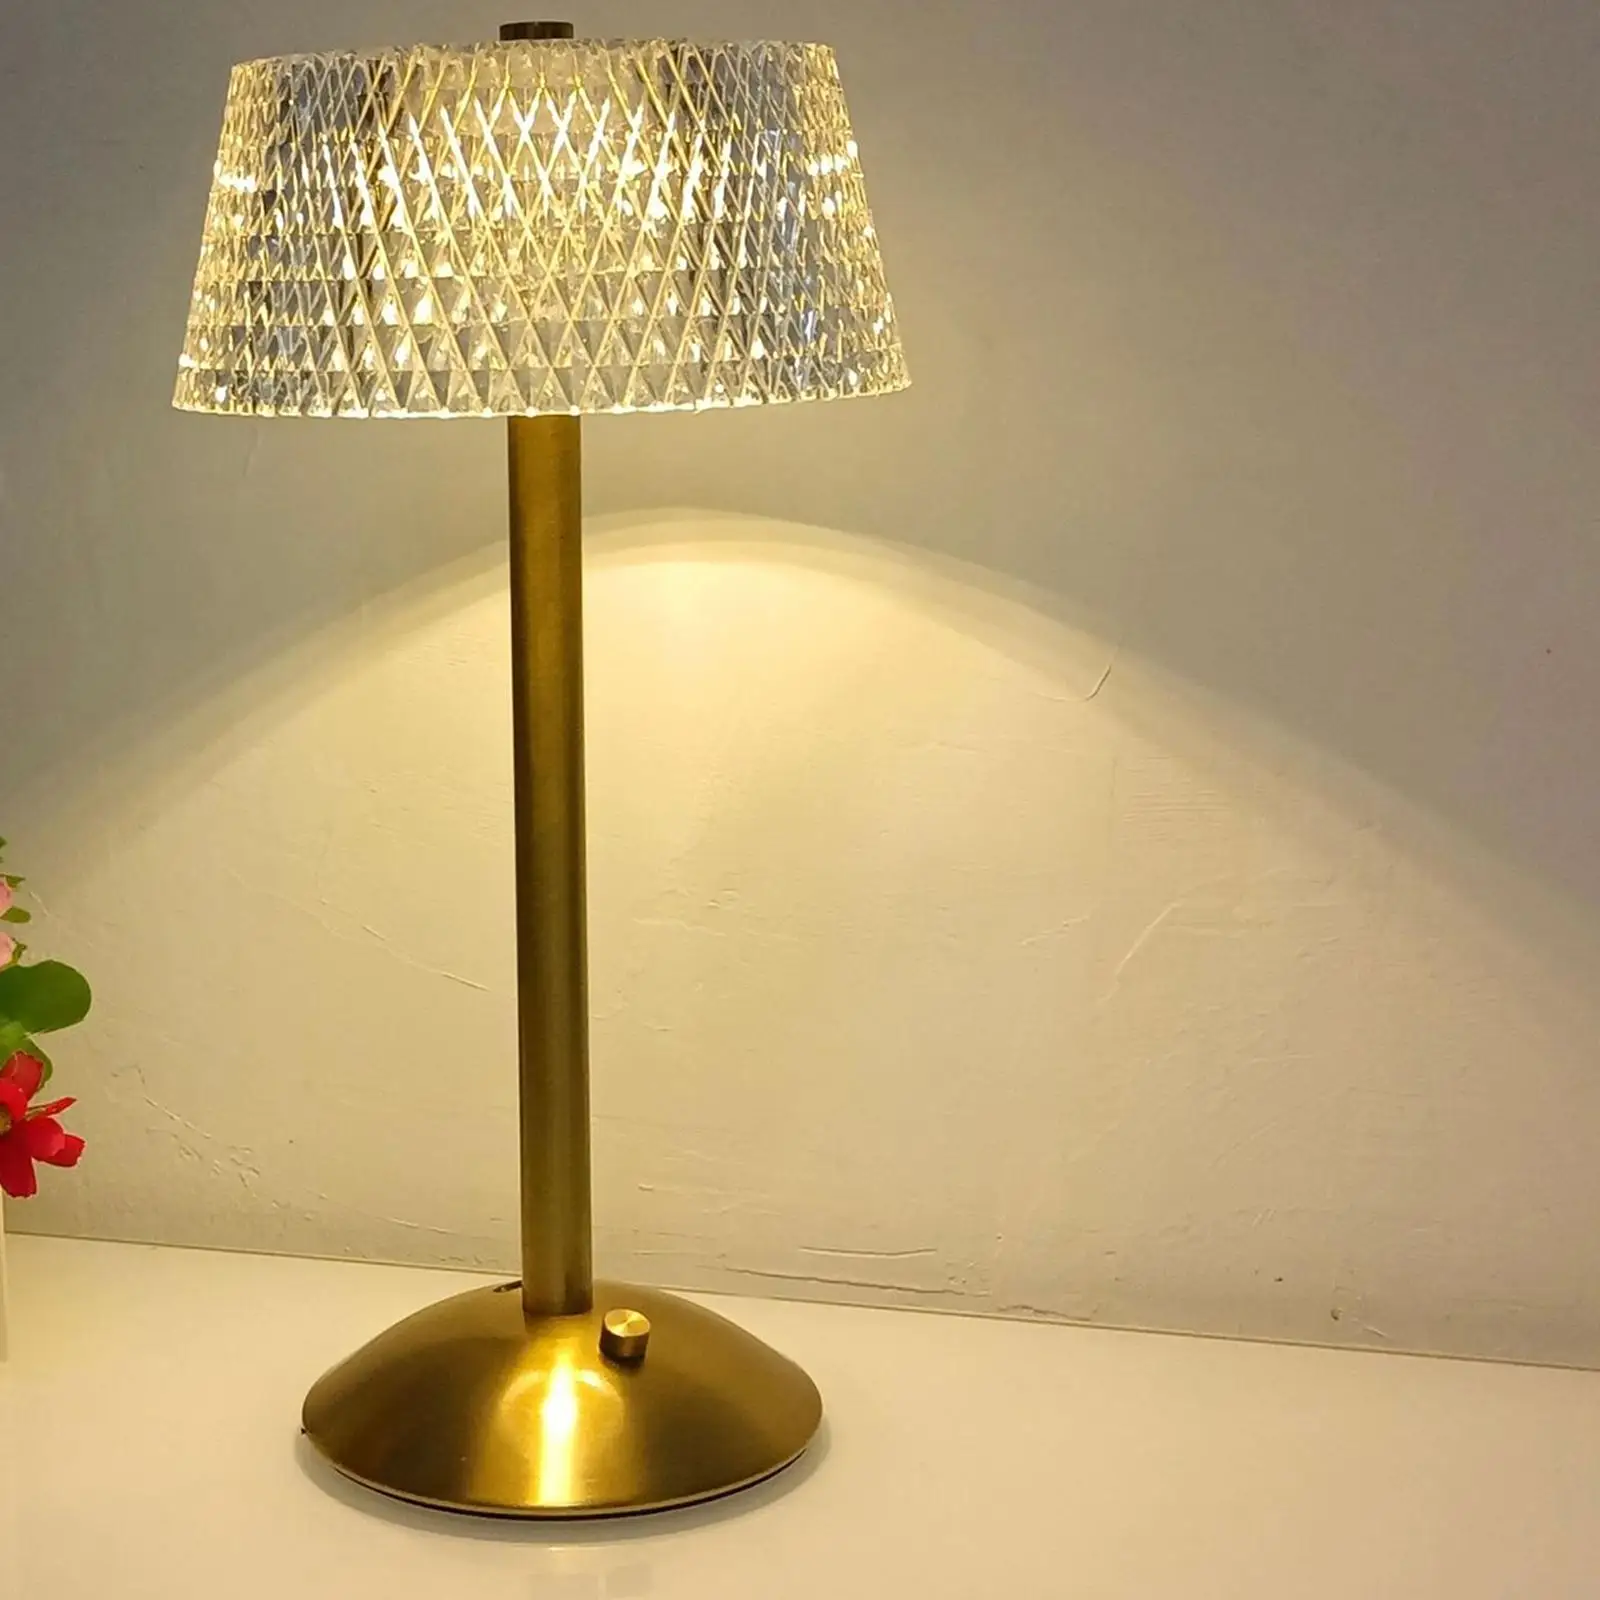 Modern Lamp Light Luxury for Bedroom Dormitory Ornament